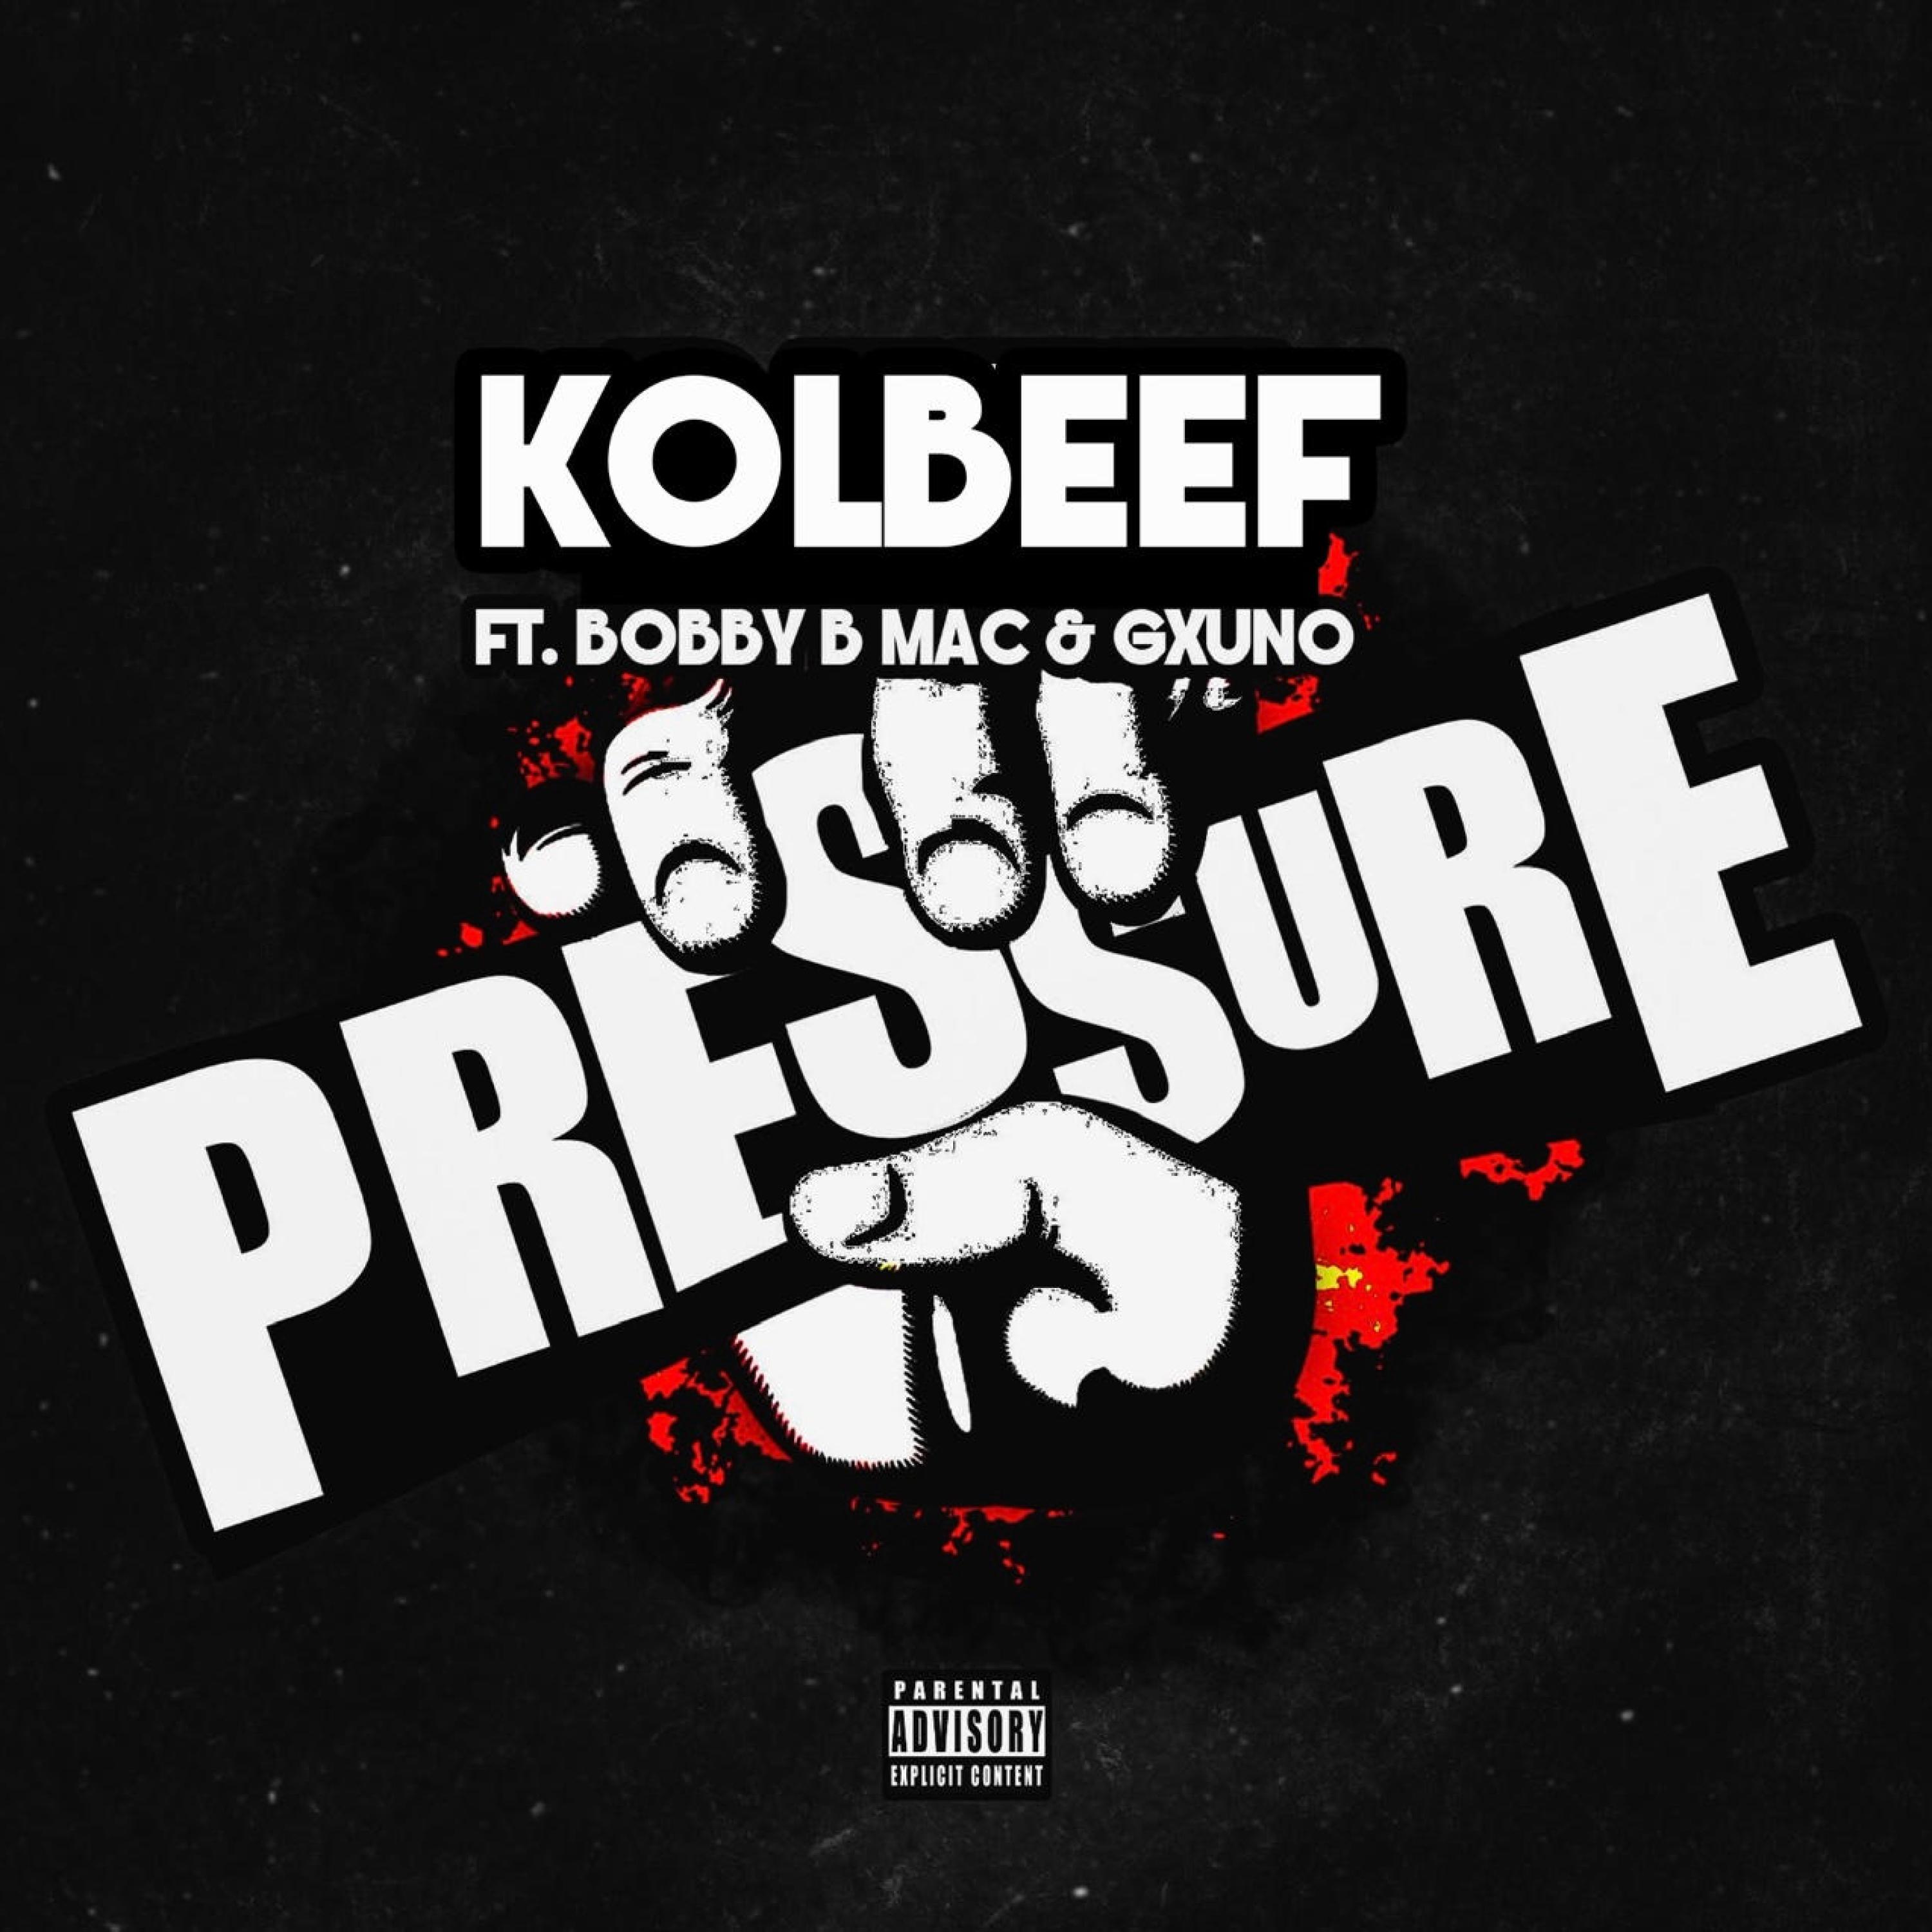 Kolbeef - Pressure (feat. Bobby B Mac & GxUNO)